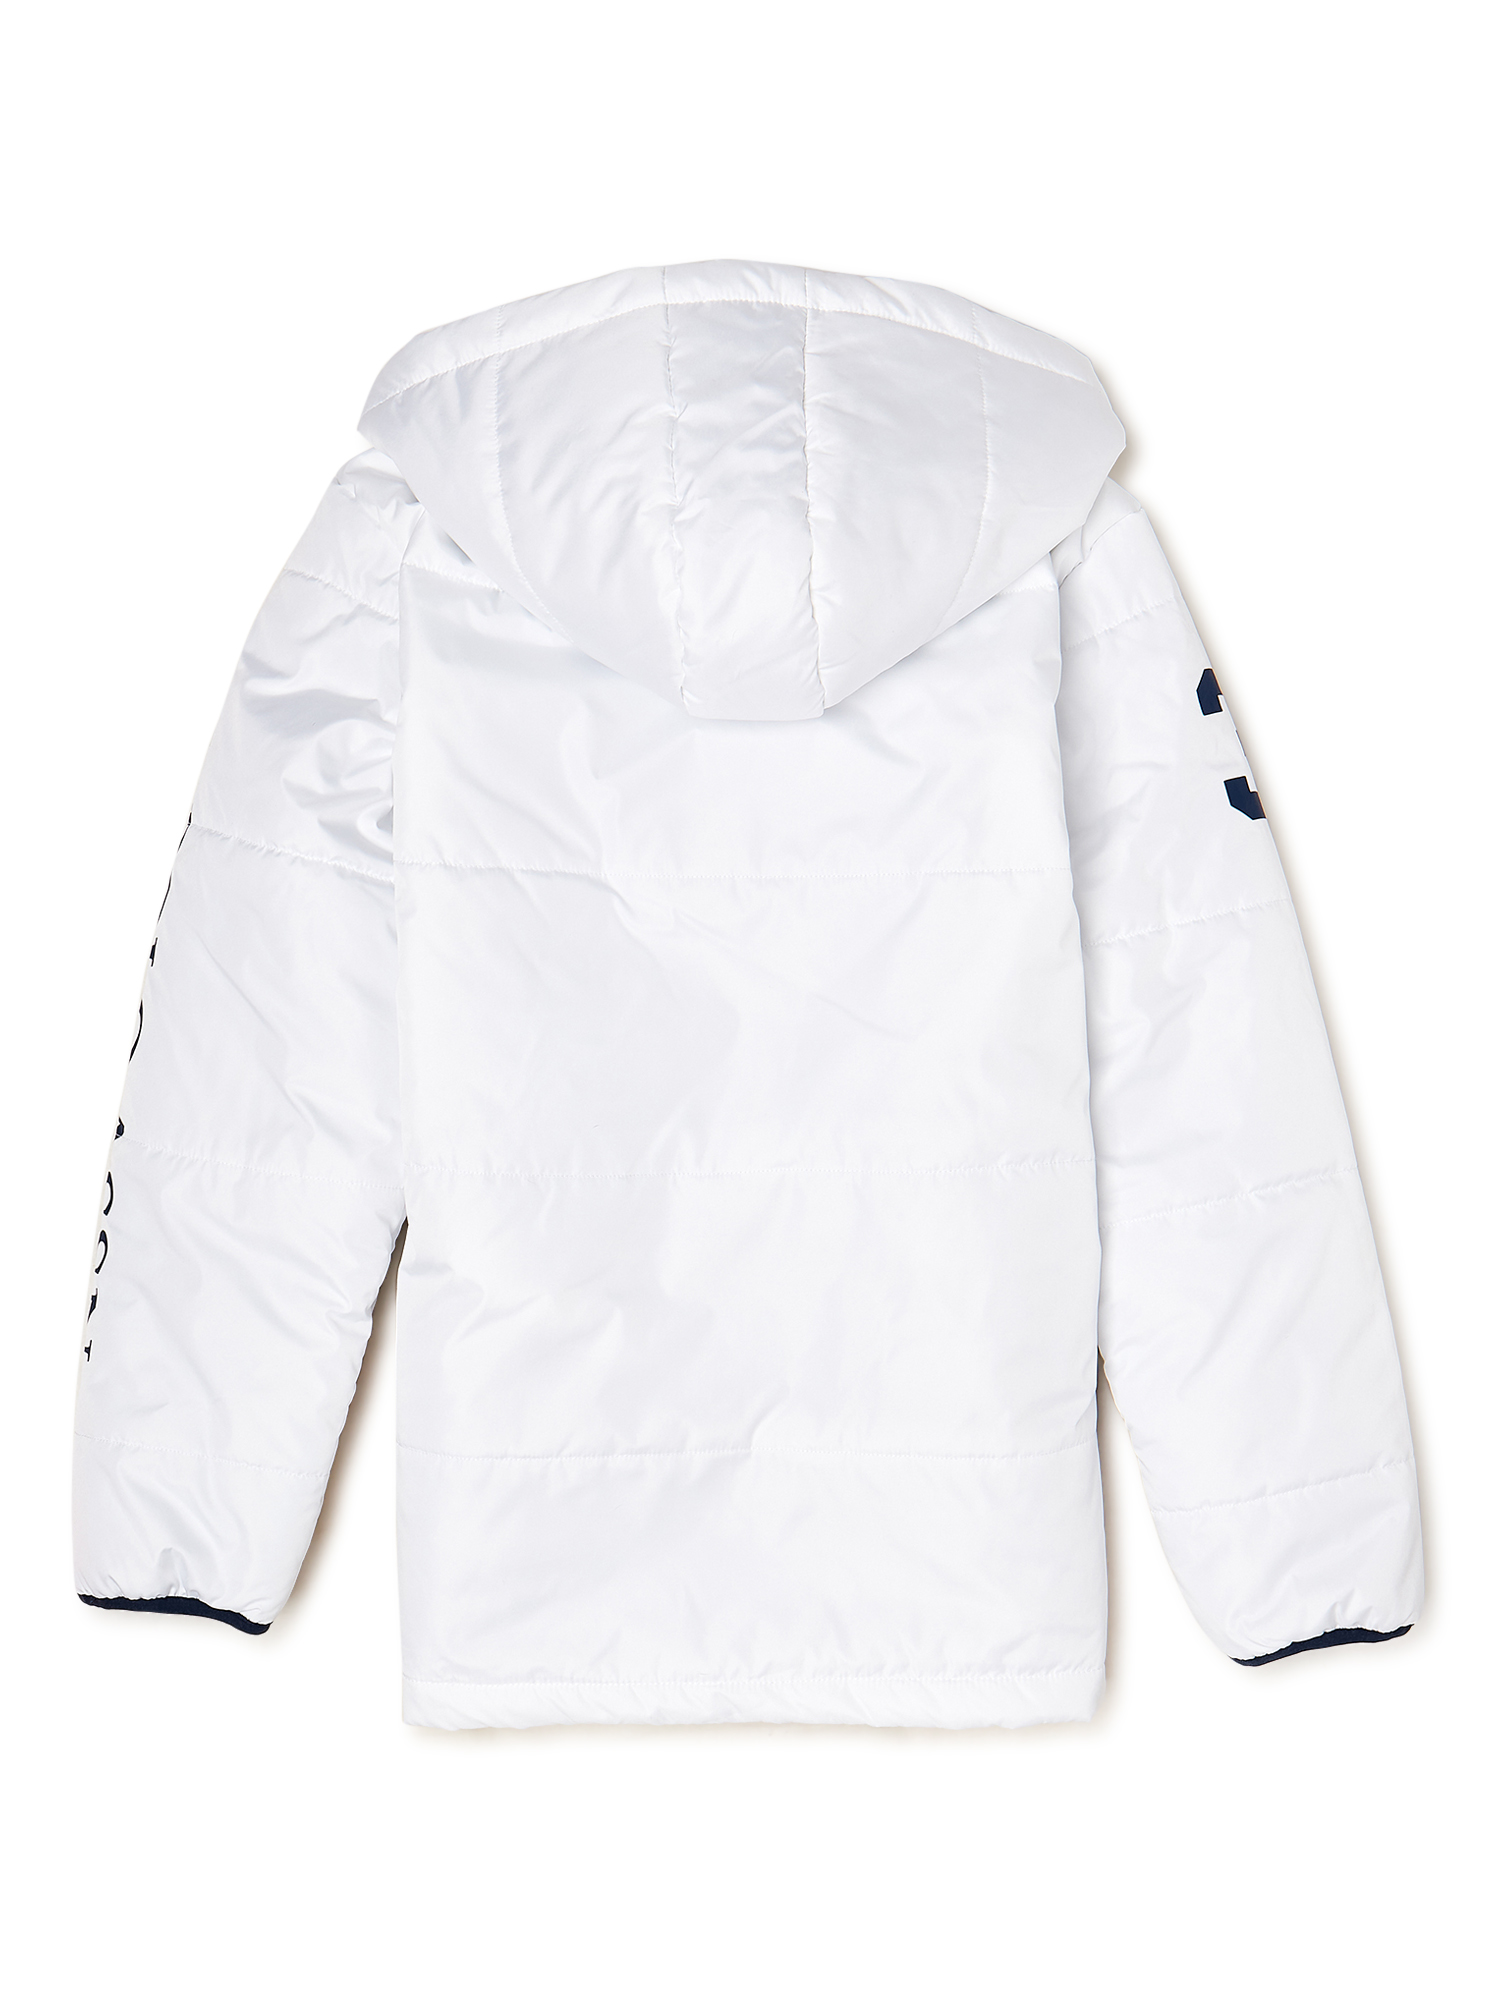 U.S. Polo Assn. Boys’ Logo Puffer Jacket, Sizes 8-20 - image 3 of 5